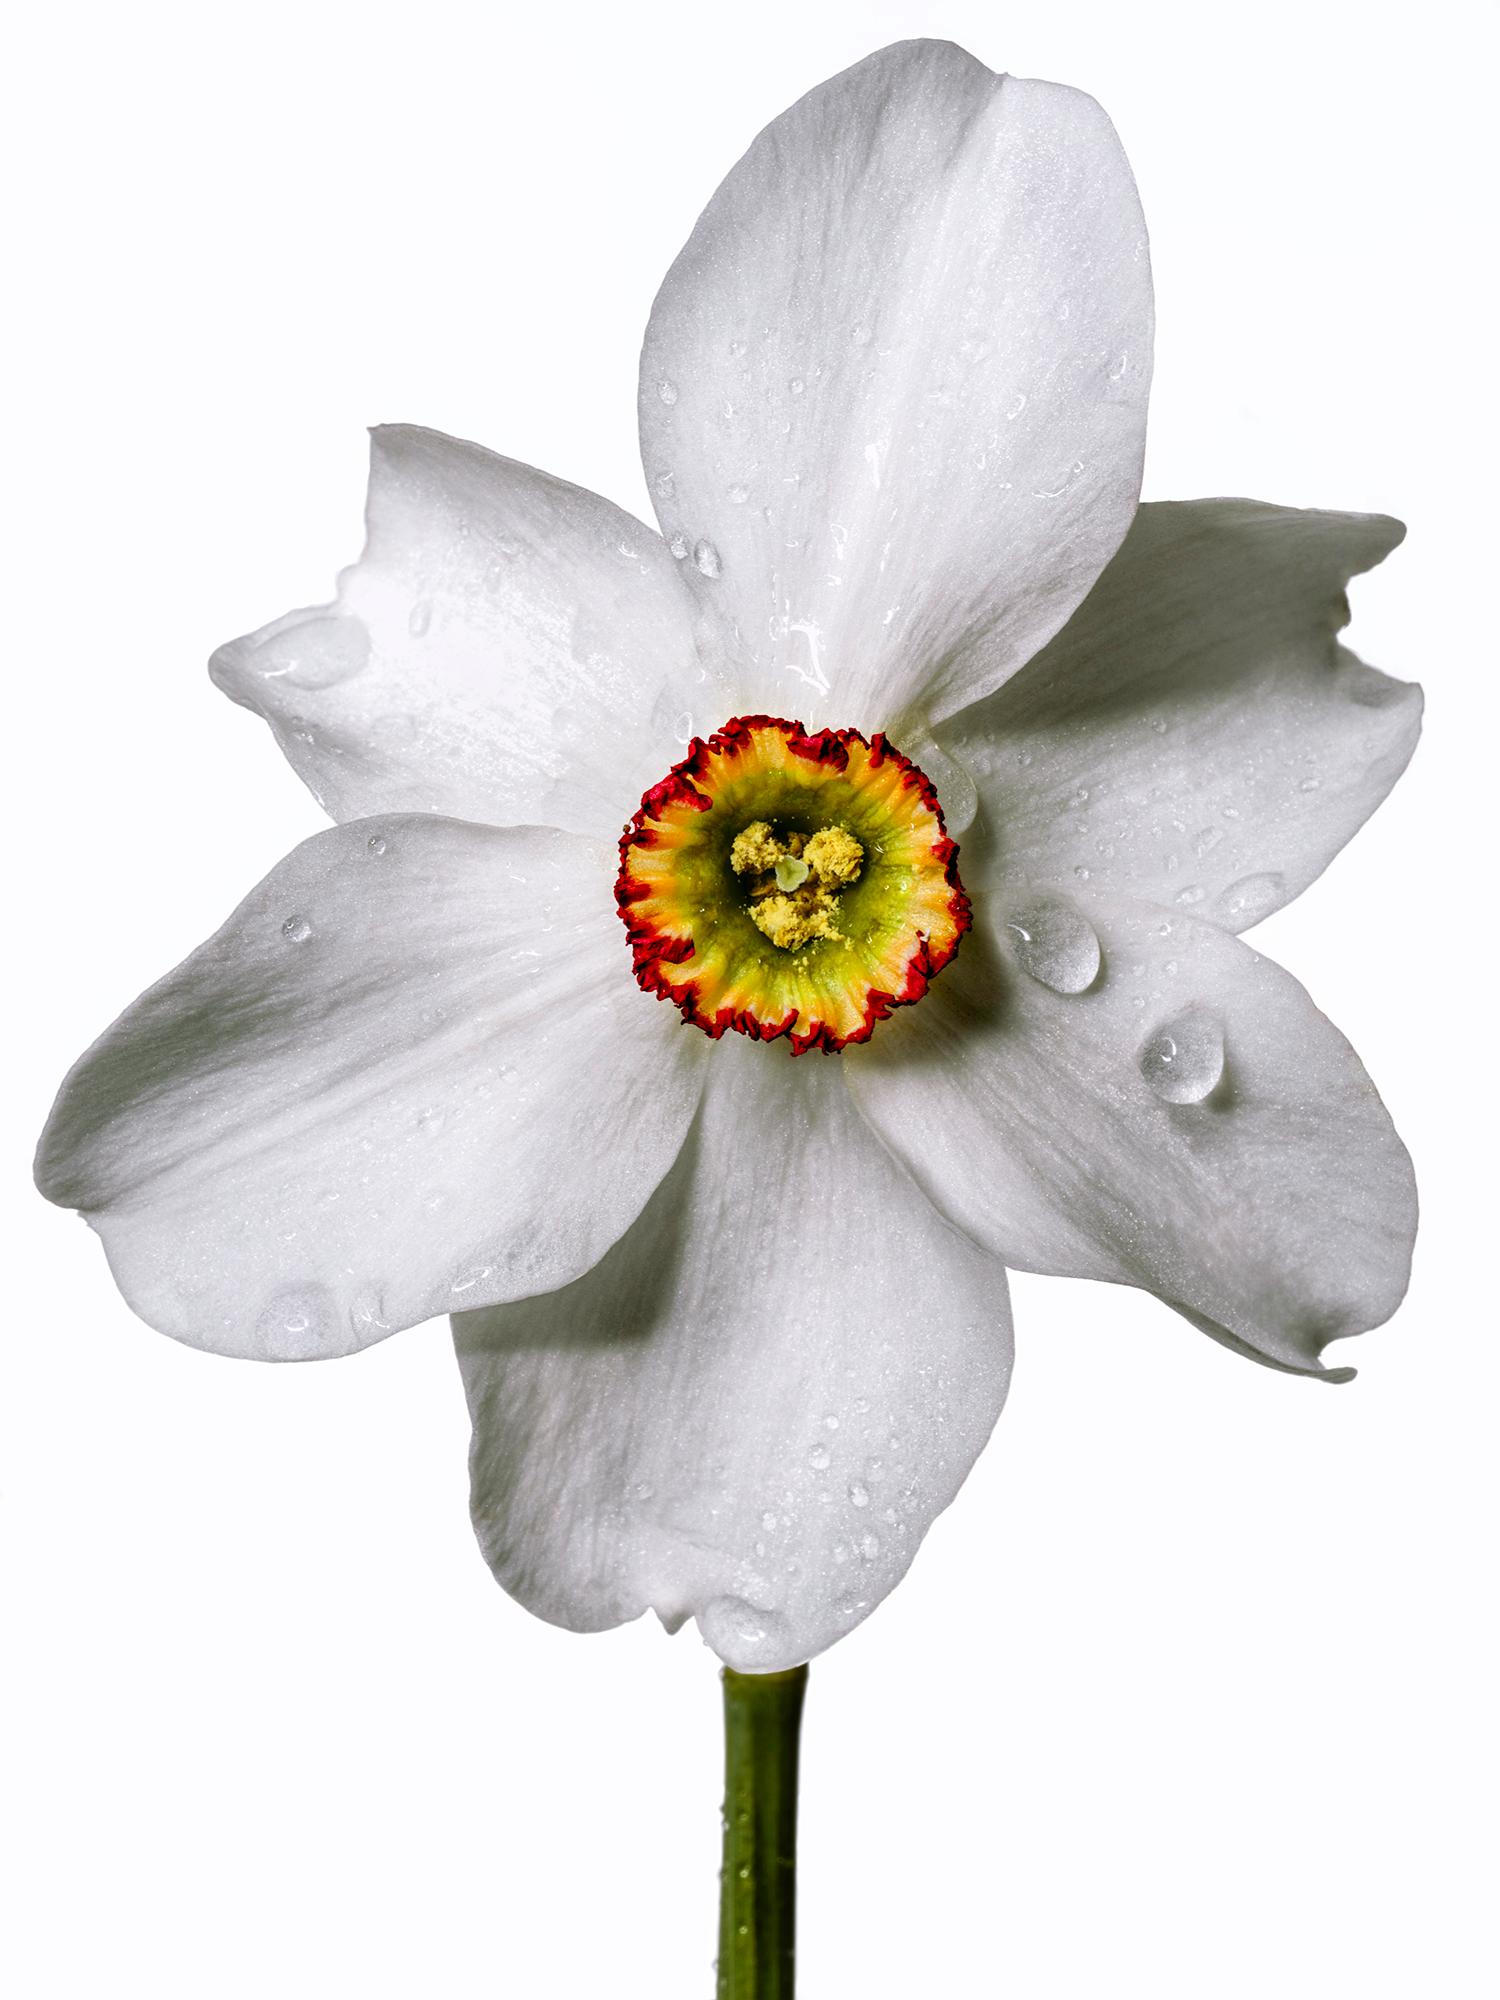 Linda Rosewall Color Photograph – Flora Italiana ( Narcissus Poetic) – großformatige botanische Stilllebenfotografie